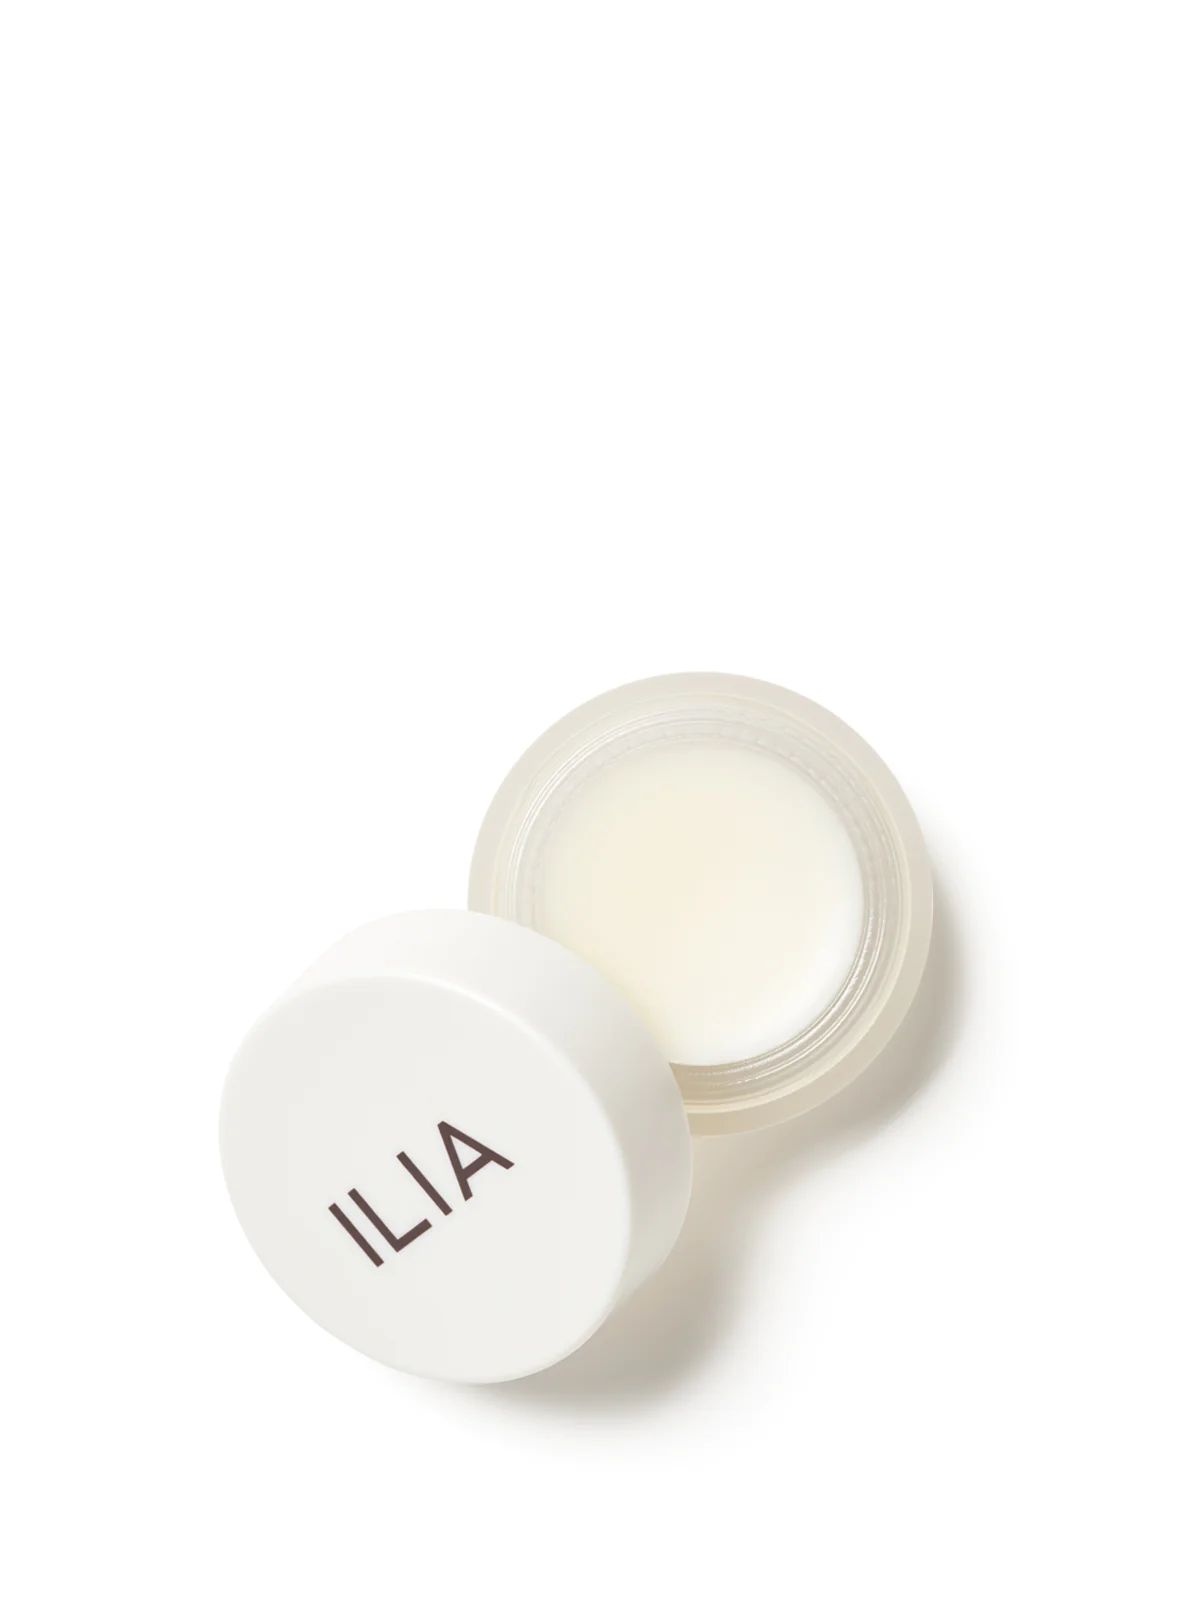 ILIA Lip Wrap Overnight Treatment - Lip Wrap Overnight Treatment | ILIA Beauty